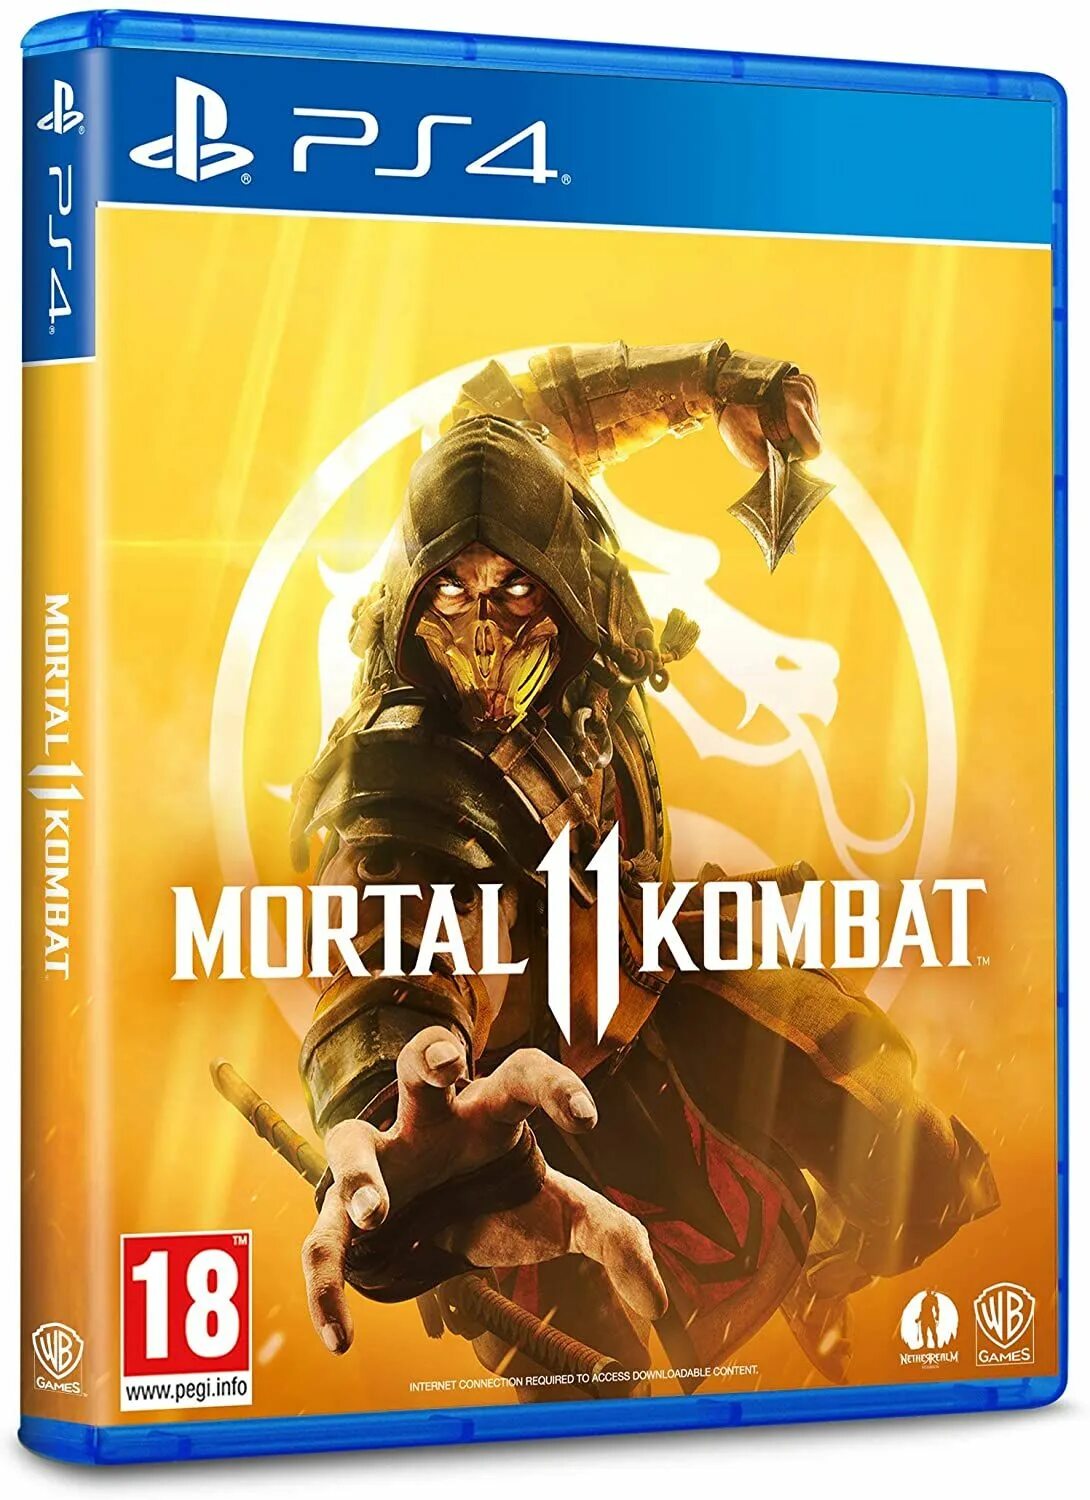 Ps5 mortal kombat купить. Диски для Sony PLAYSTATION 4 Mortal Kombat. Мортал комбат 11 пс4. Mortal Kombat 11 [Xbox one]. Игровая диск плейстейшен 4 мортал комбат 11.